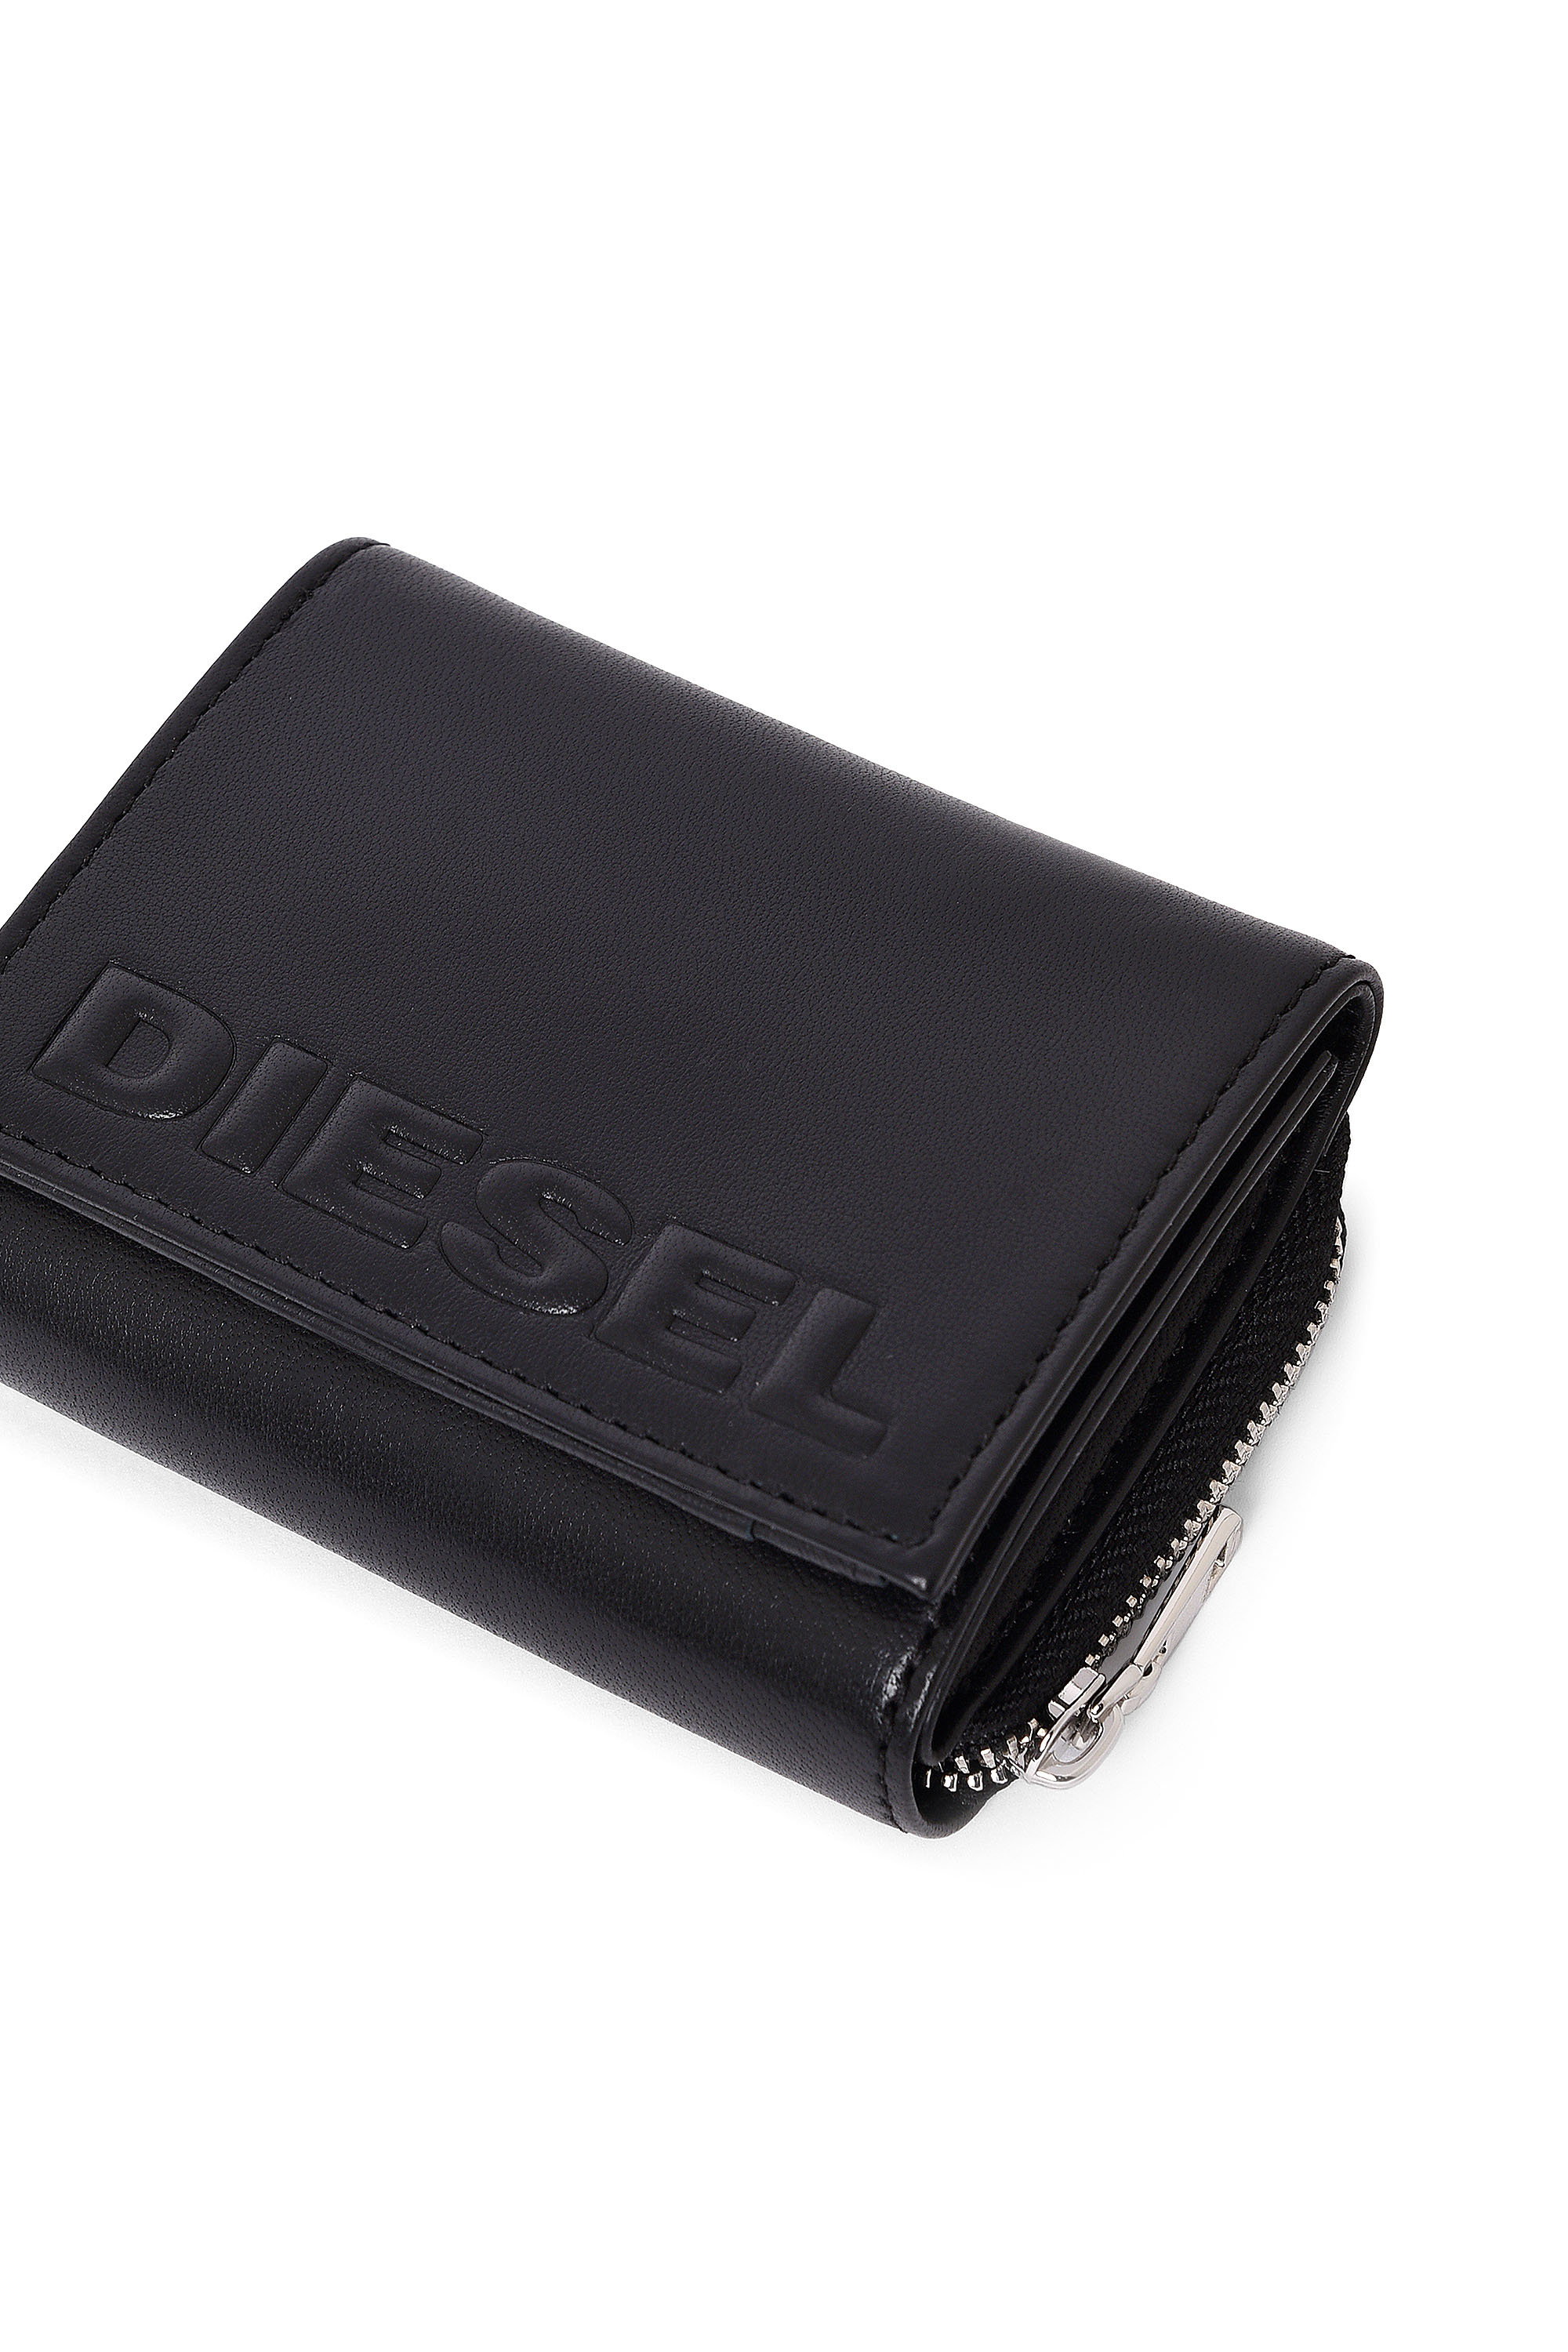 Diesel - SPEJAP, Black - Image 5